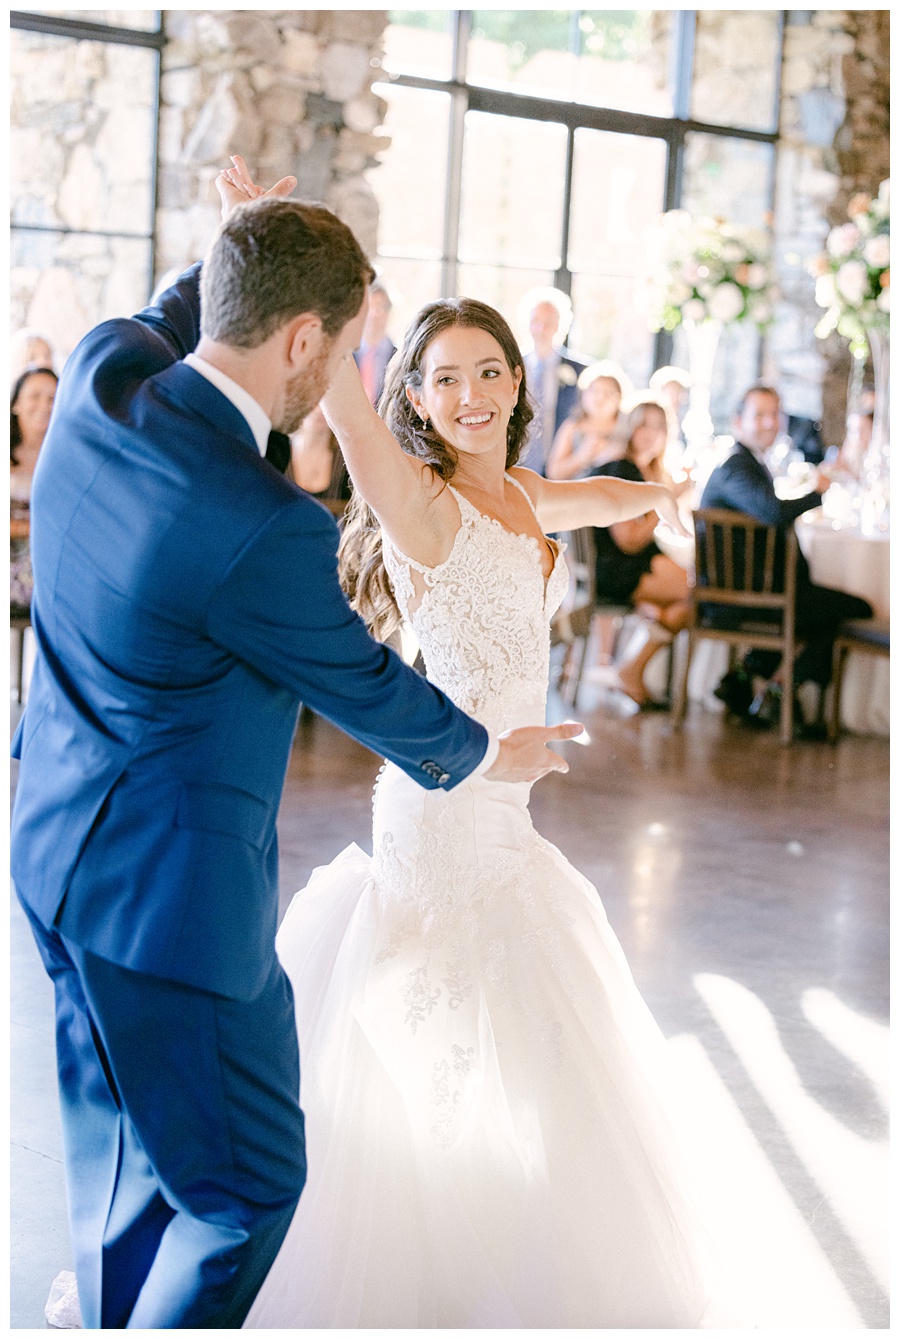 wedding dress, wedding dance, wedding first dance, bride and groom,  asheville bride, asheville north carolina photographer